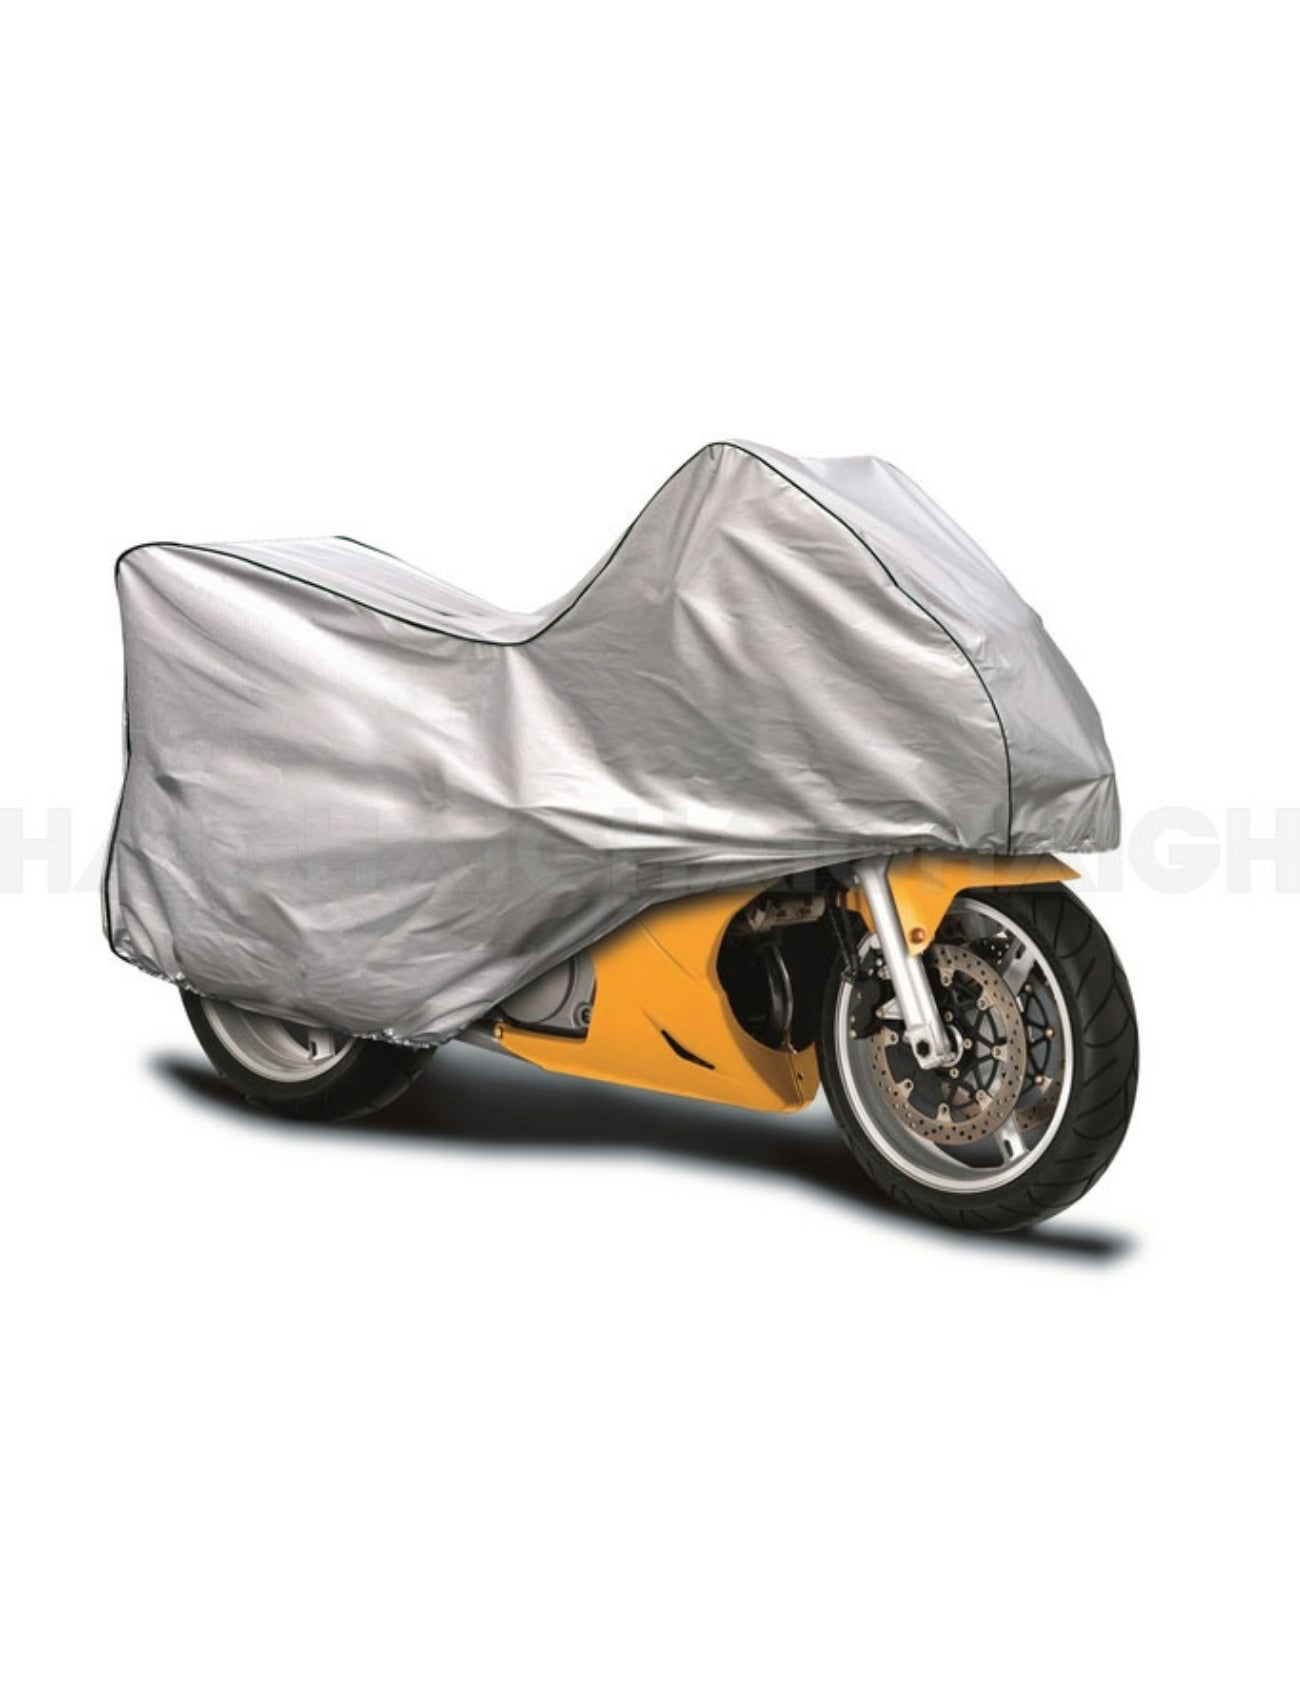 MOTORCYCLE COVER PRESTIGE 500-1000CC